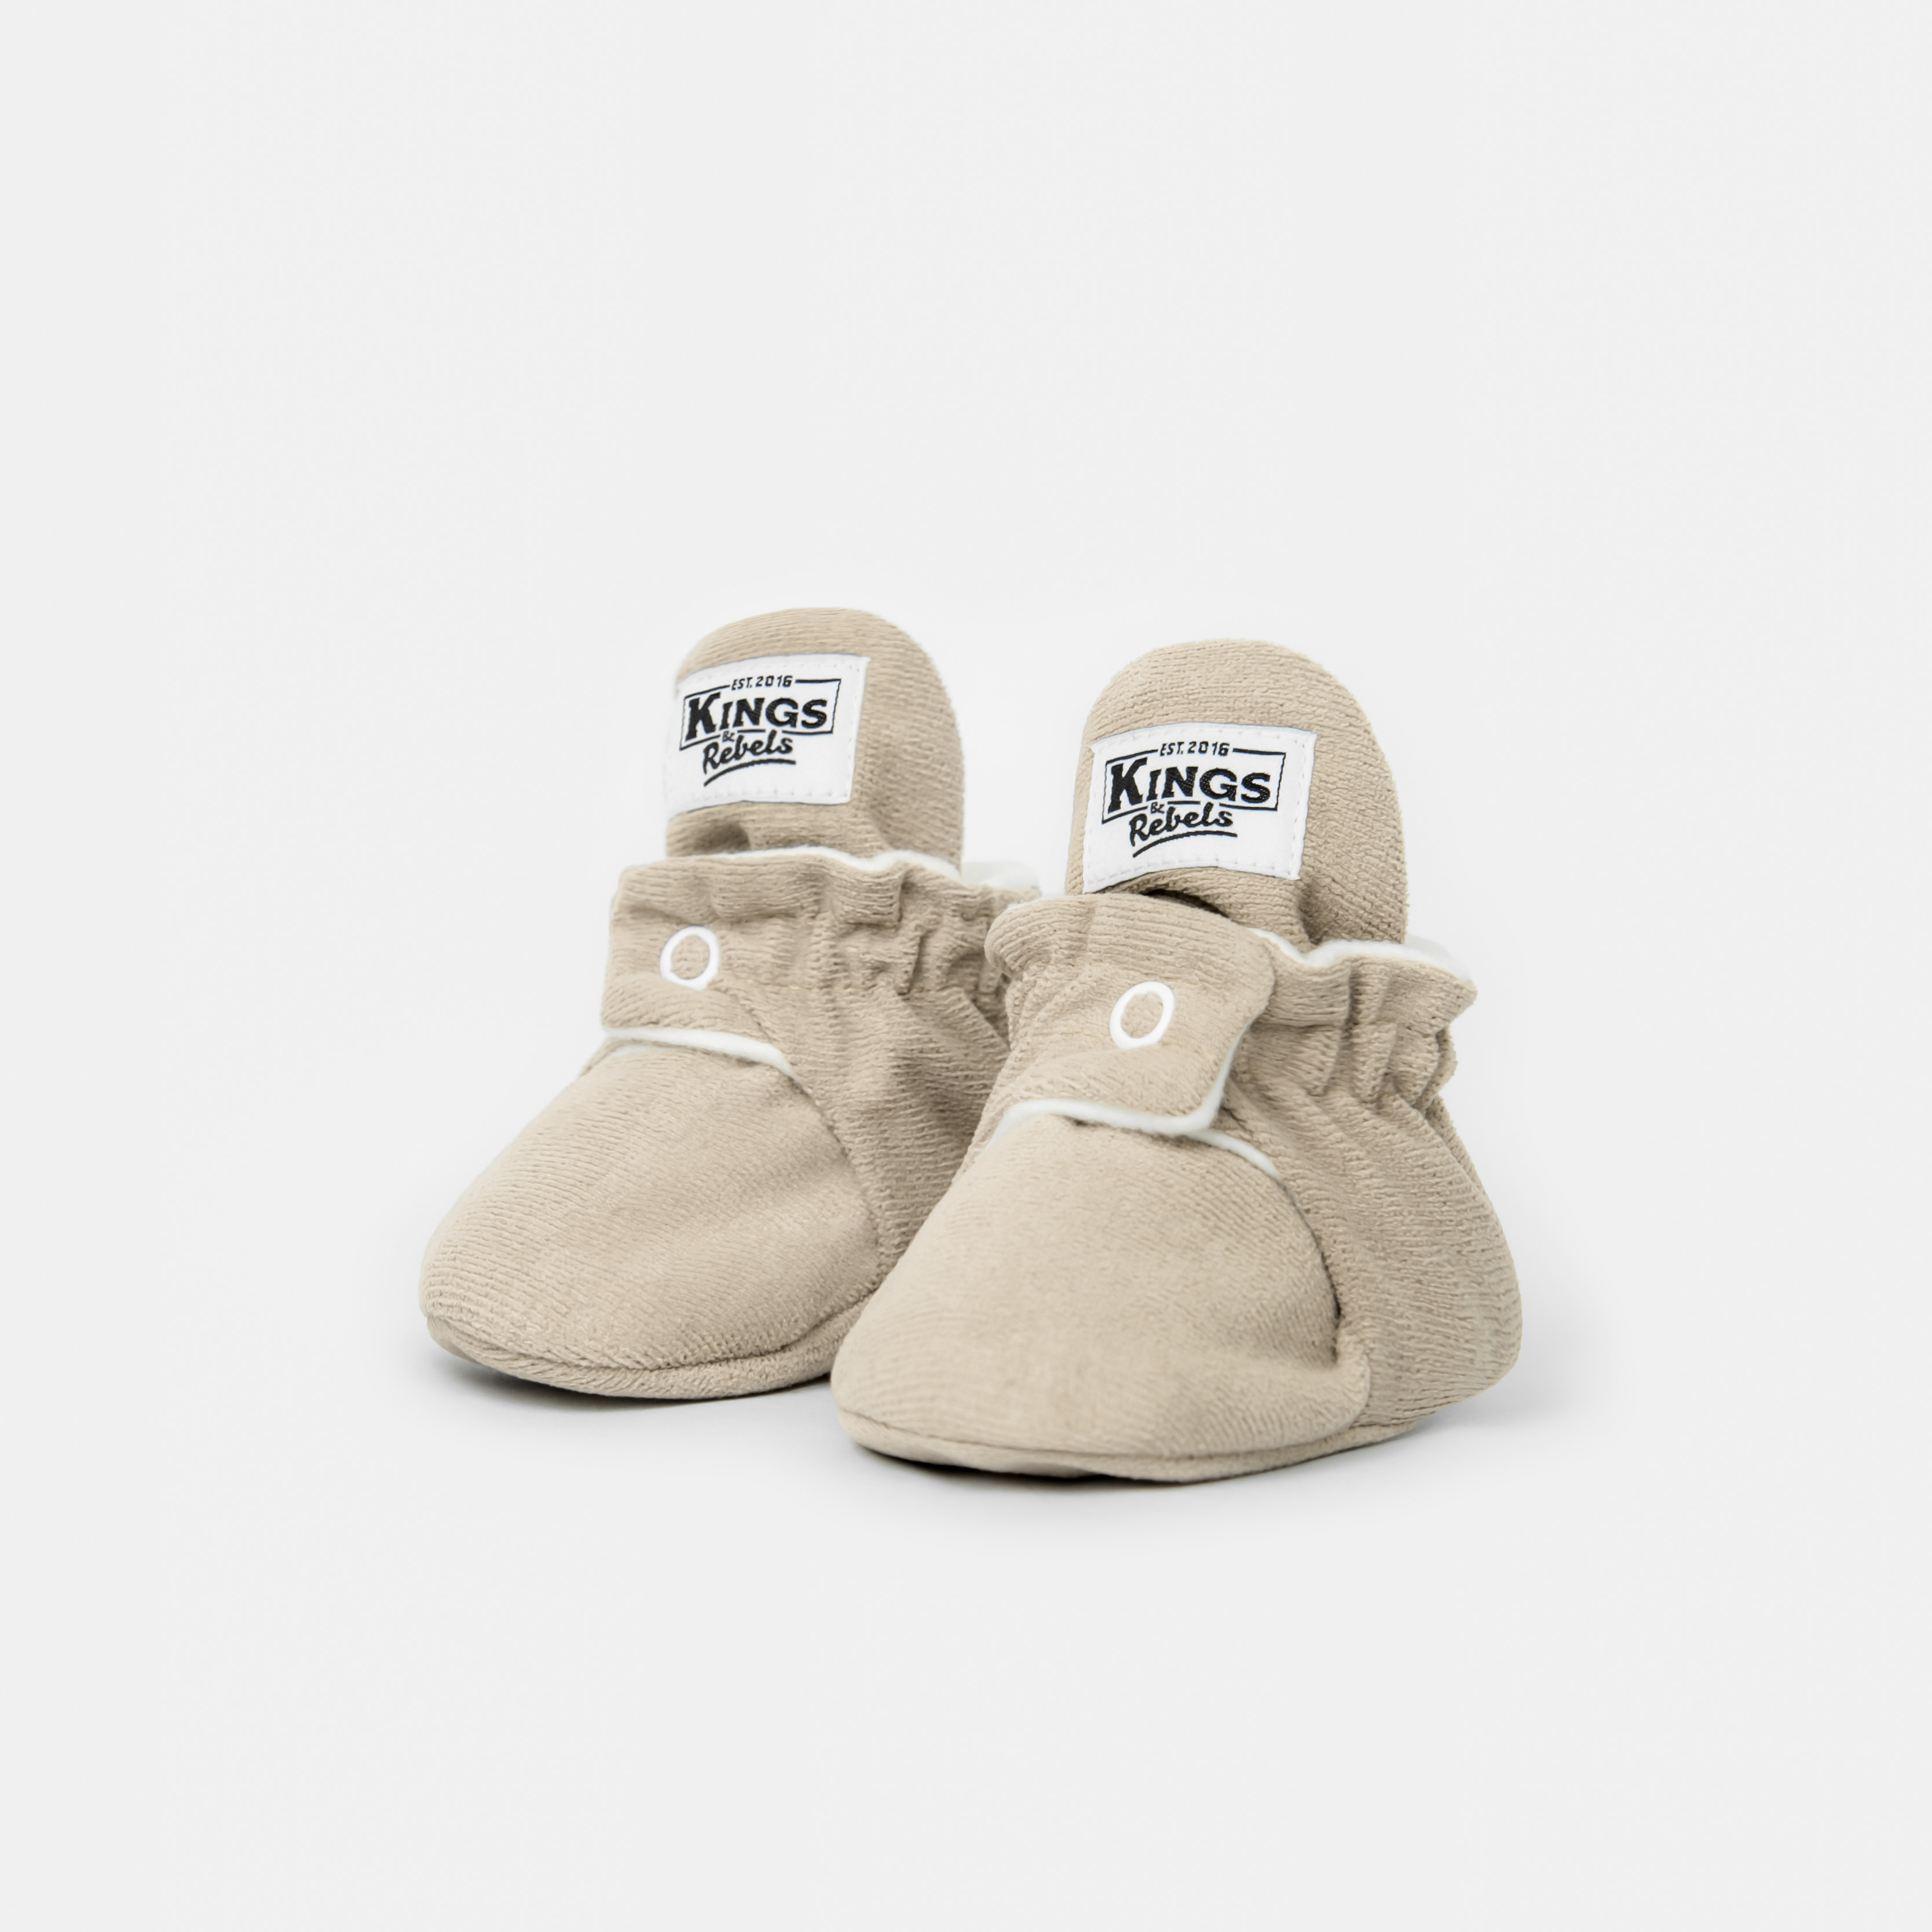 Schuhe & Co Classic/Gamuza ivory Babyschühchen 18 Monate